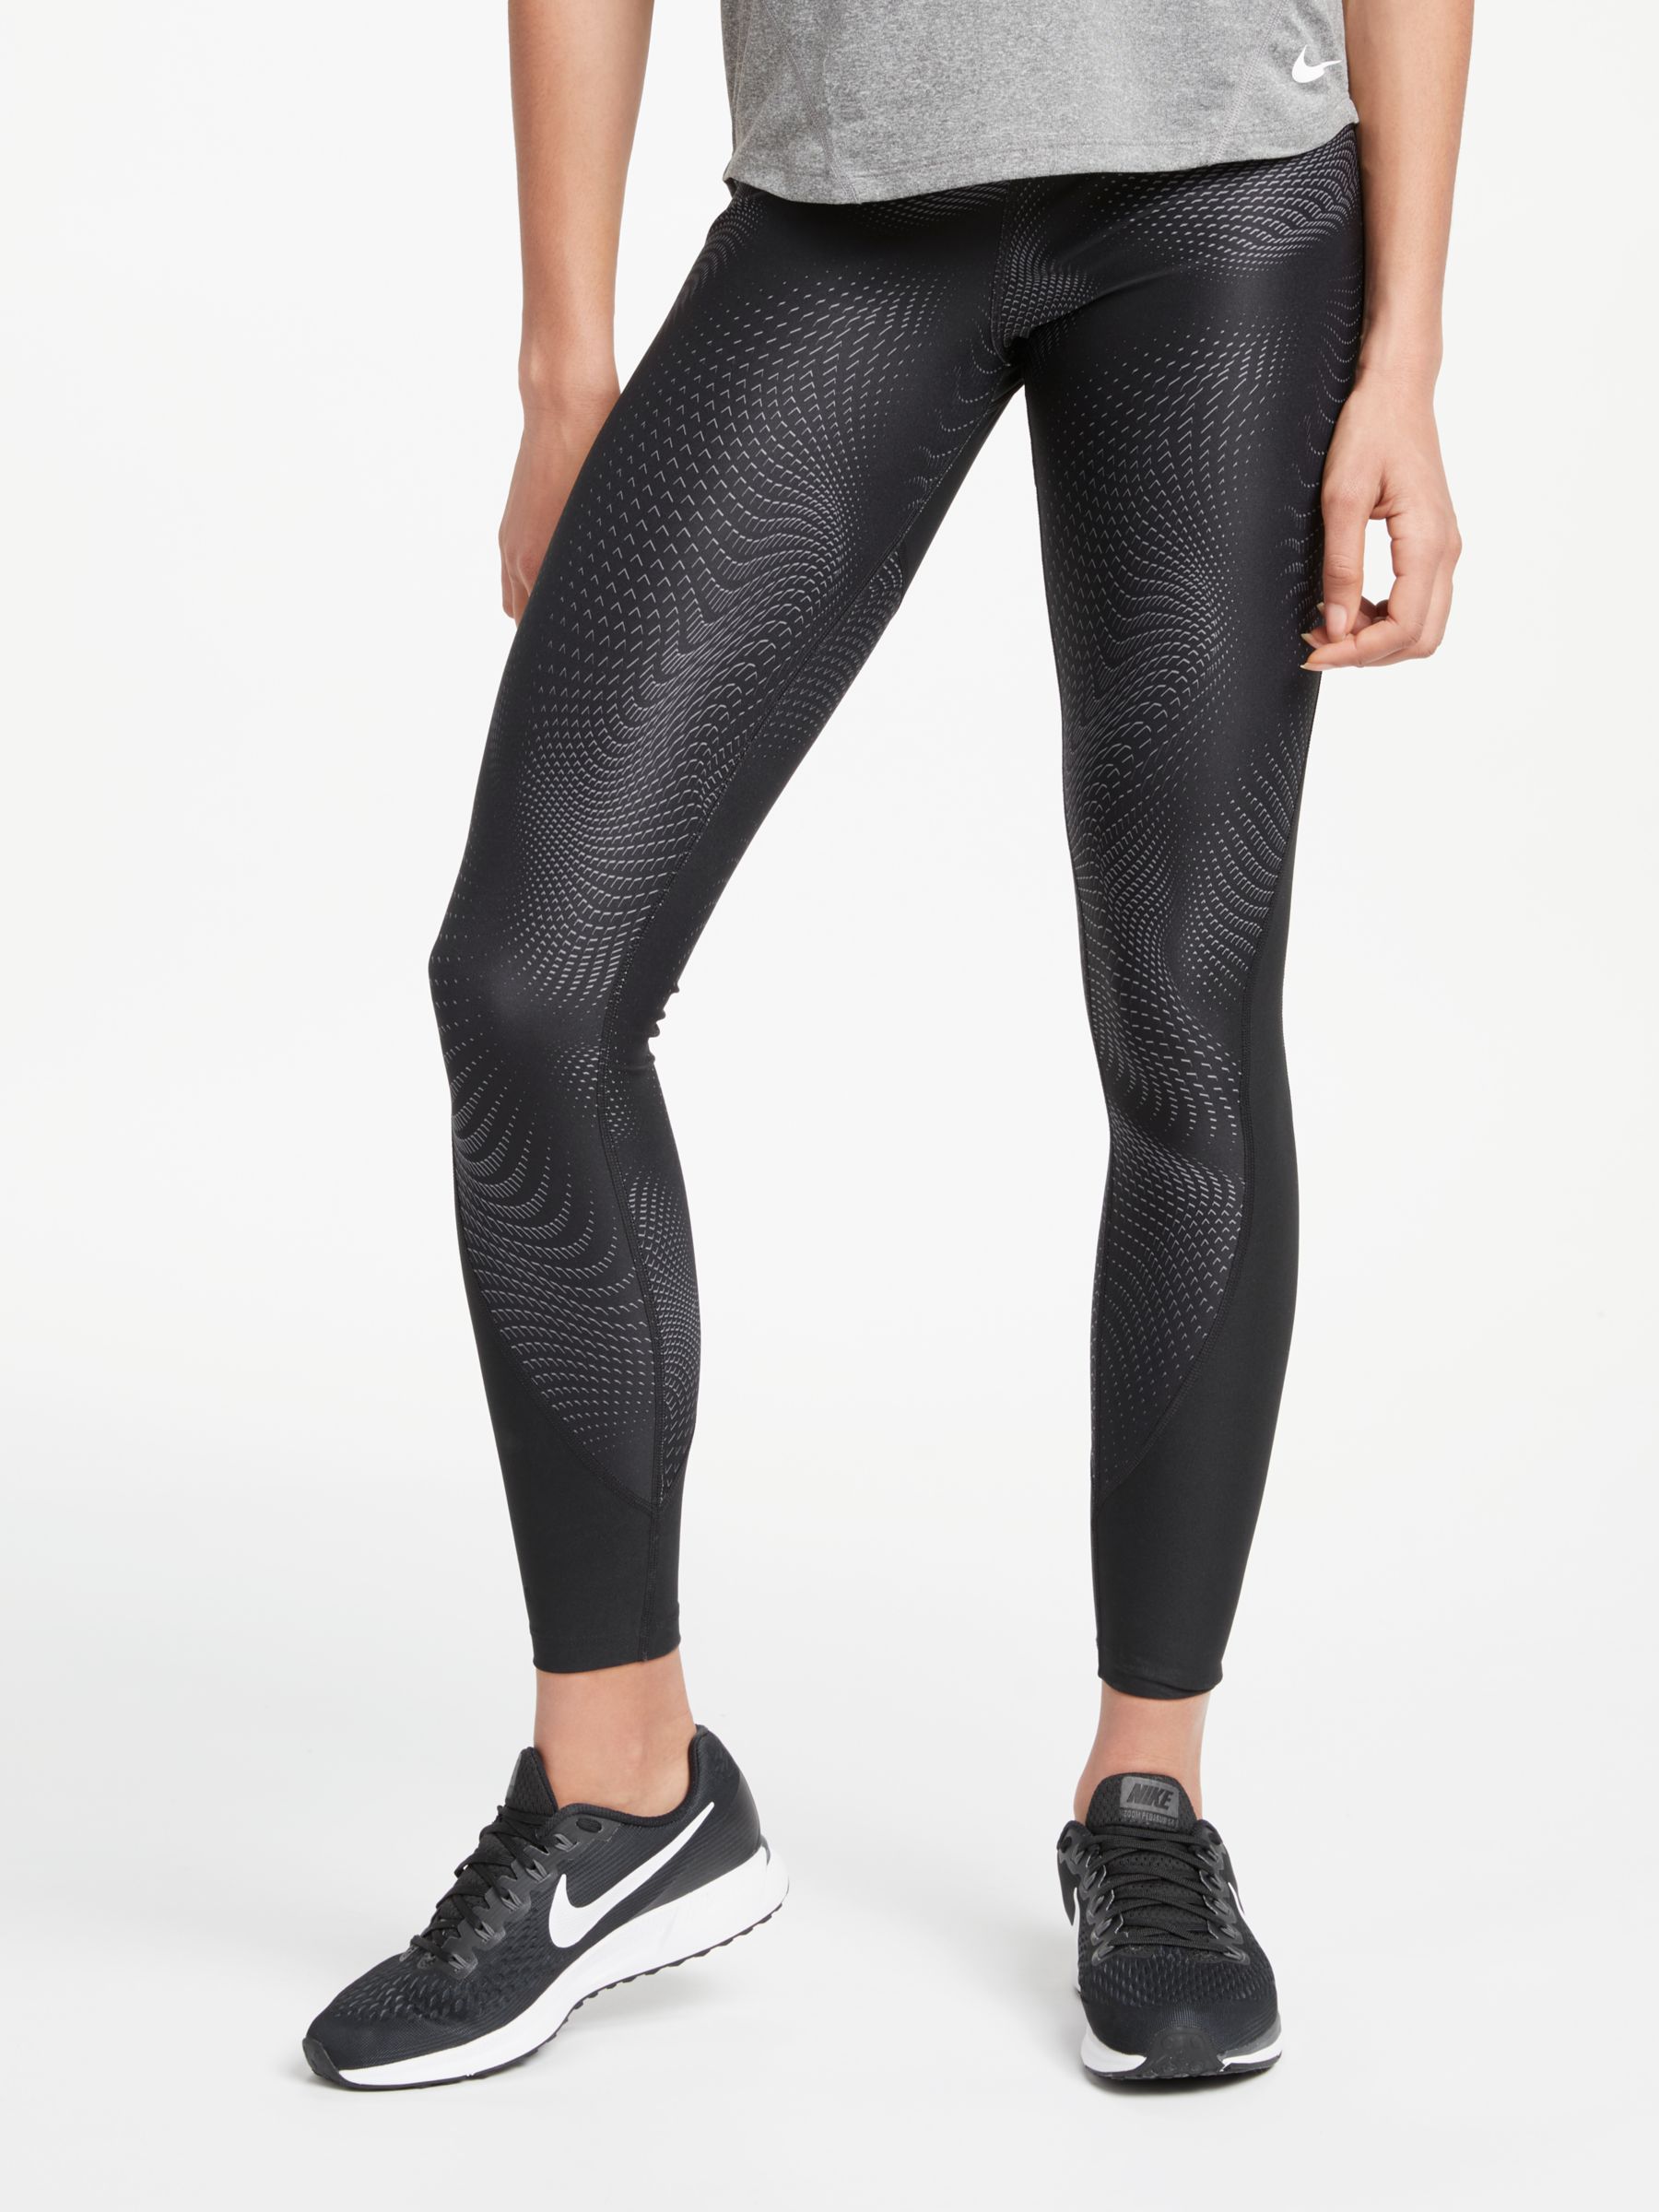 nike training power leggings in black print with mesh panels